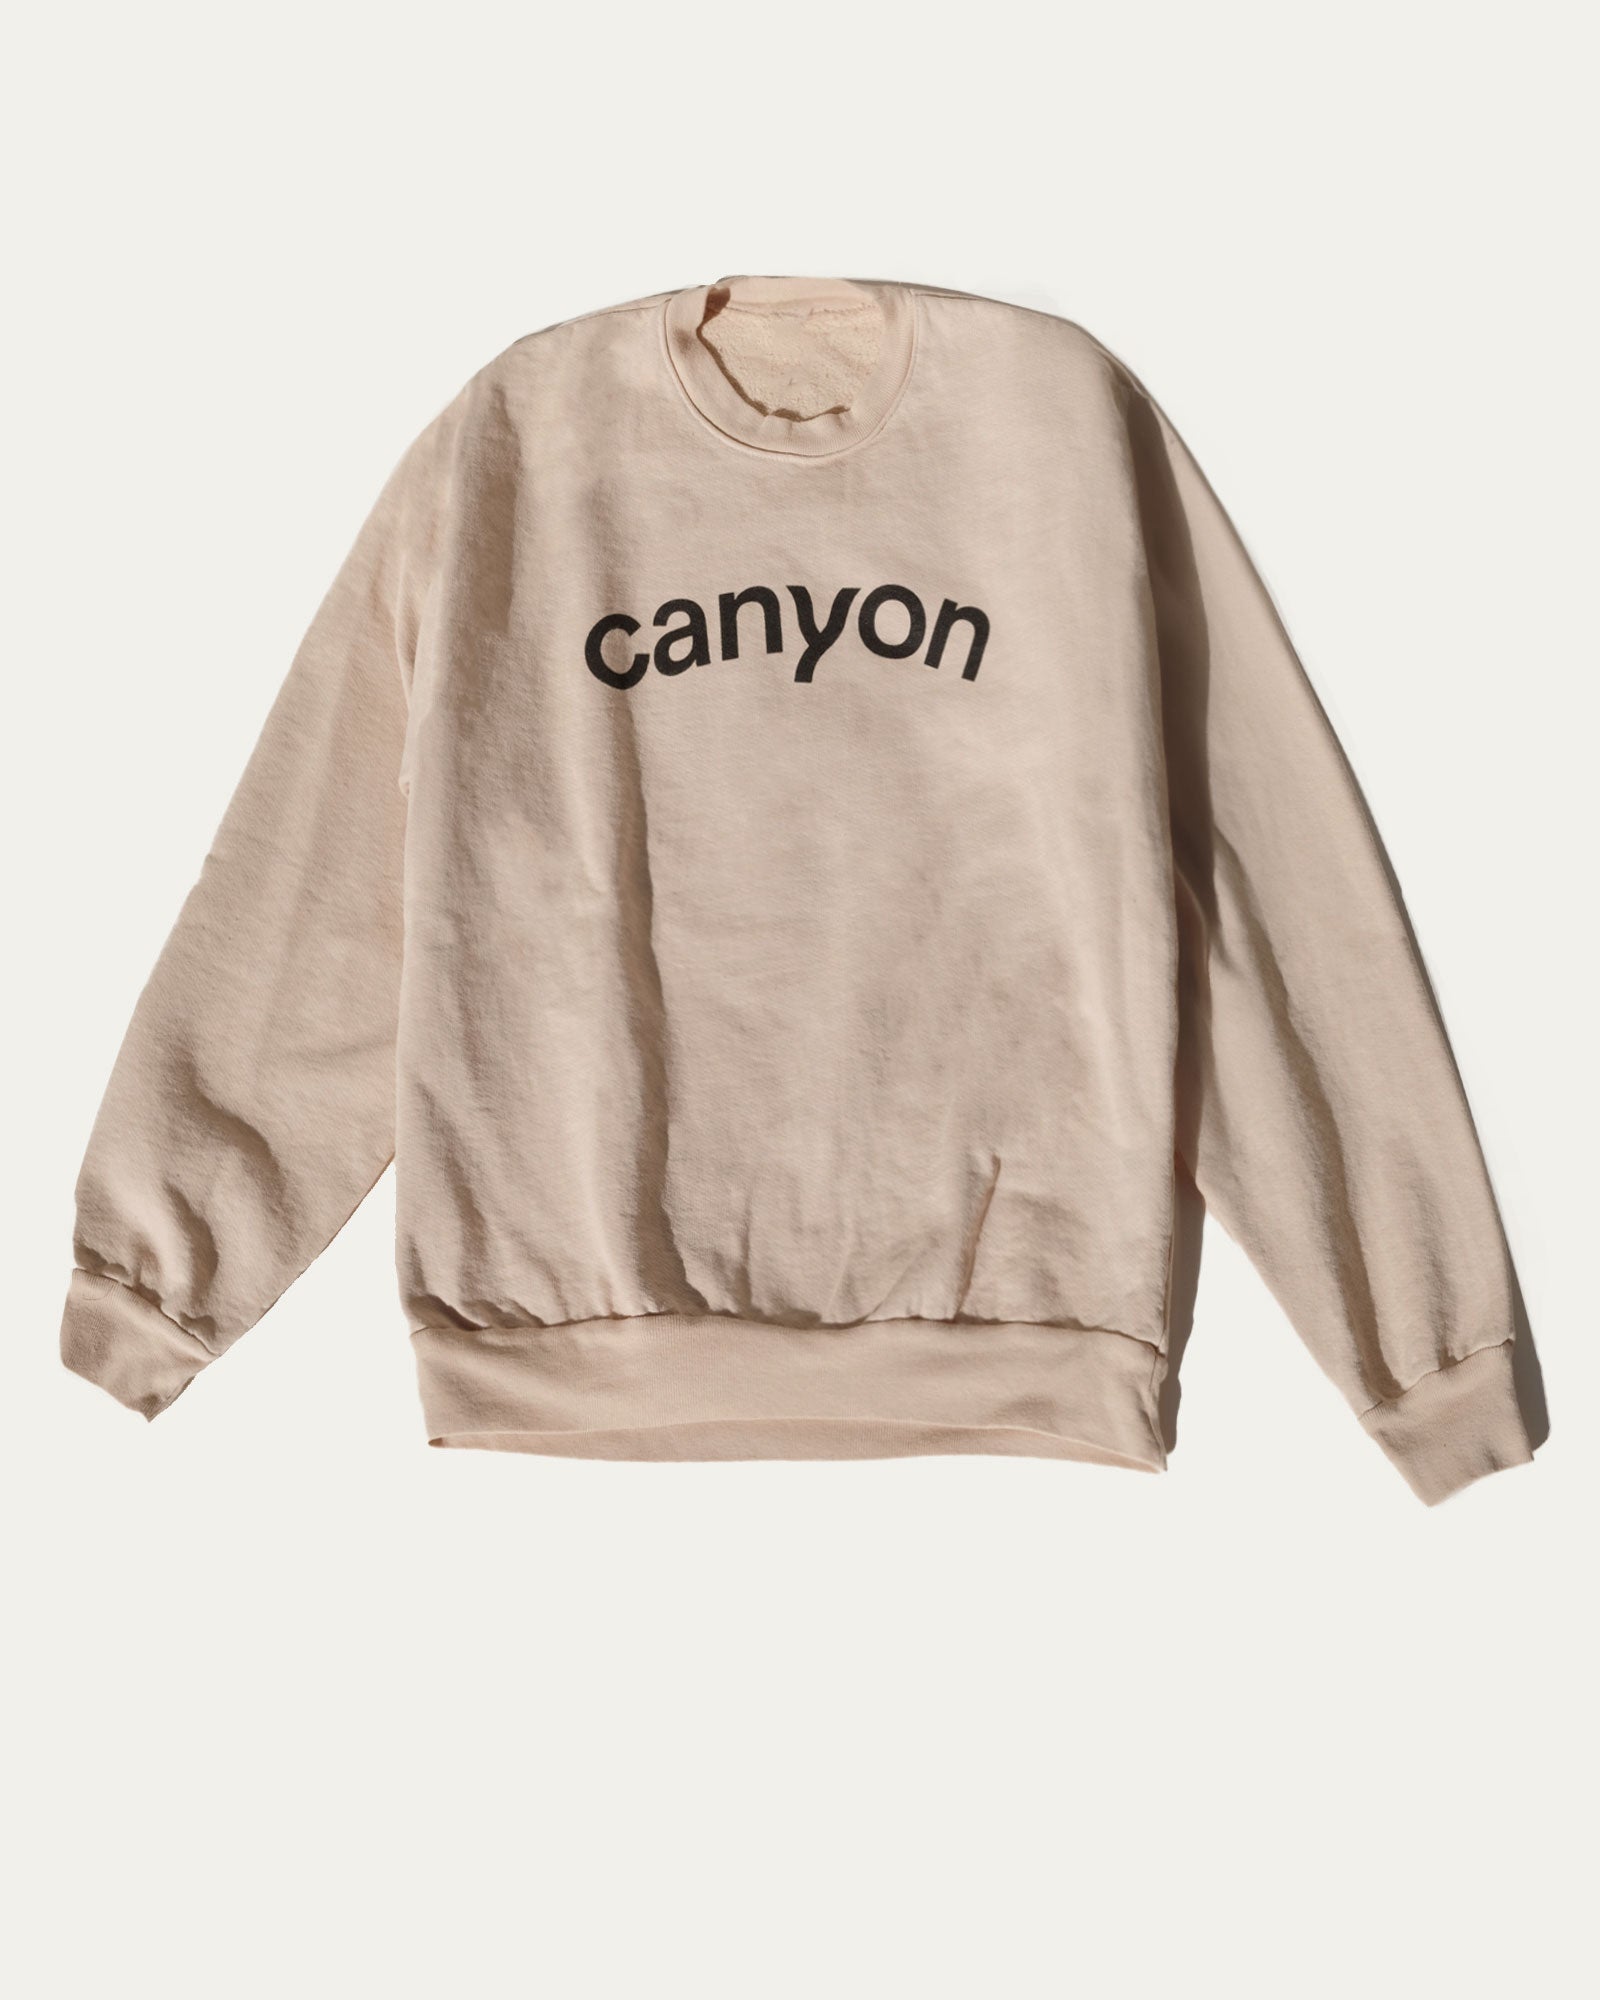 Canyon Sweatshirt in Cream